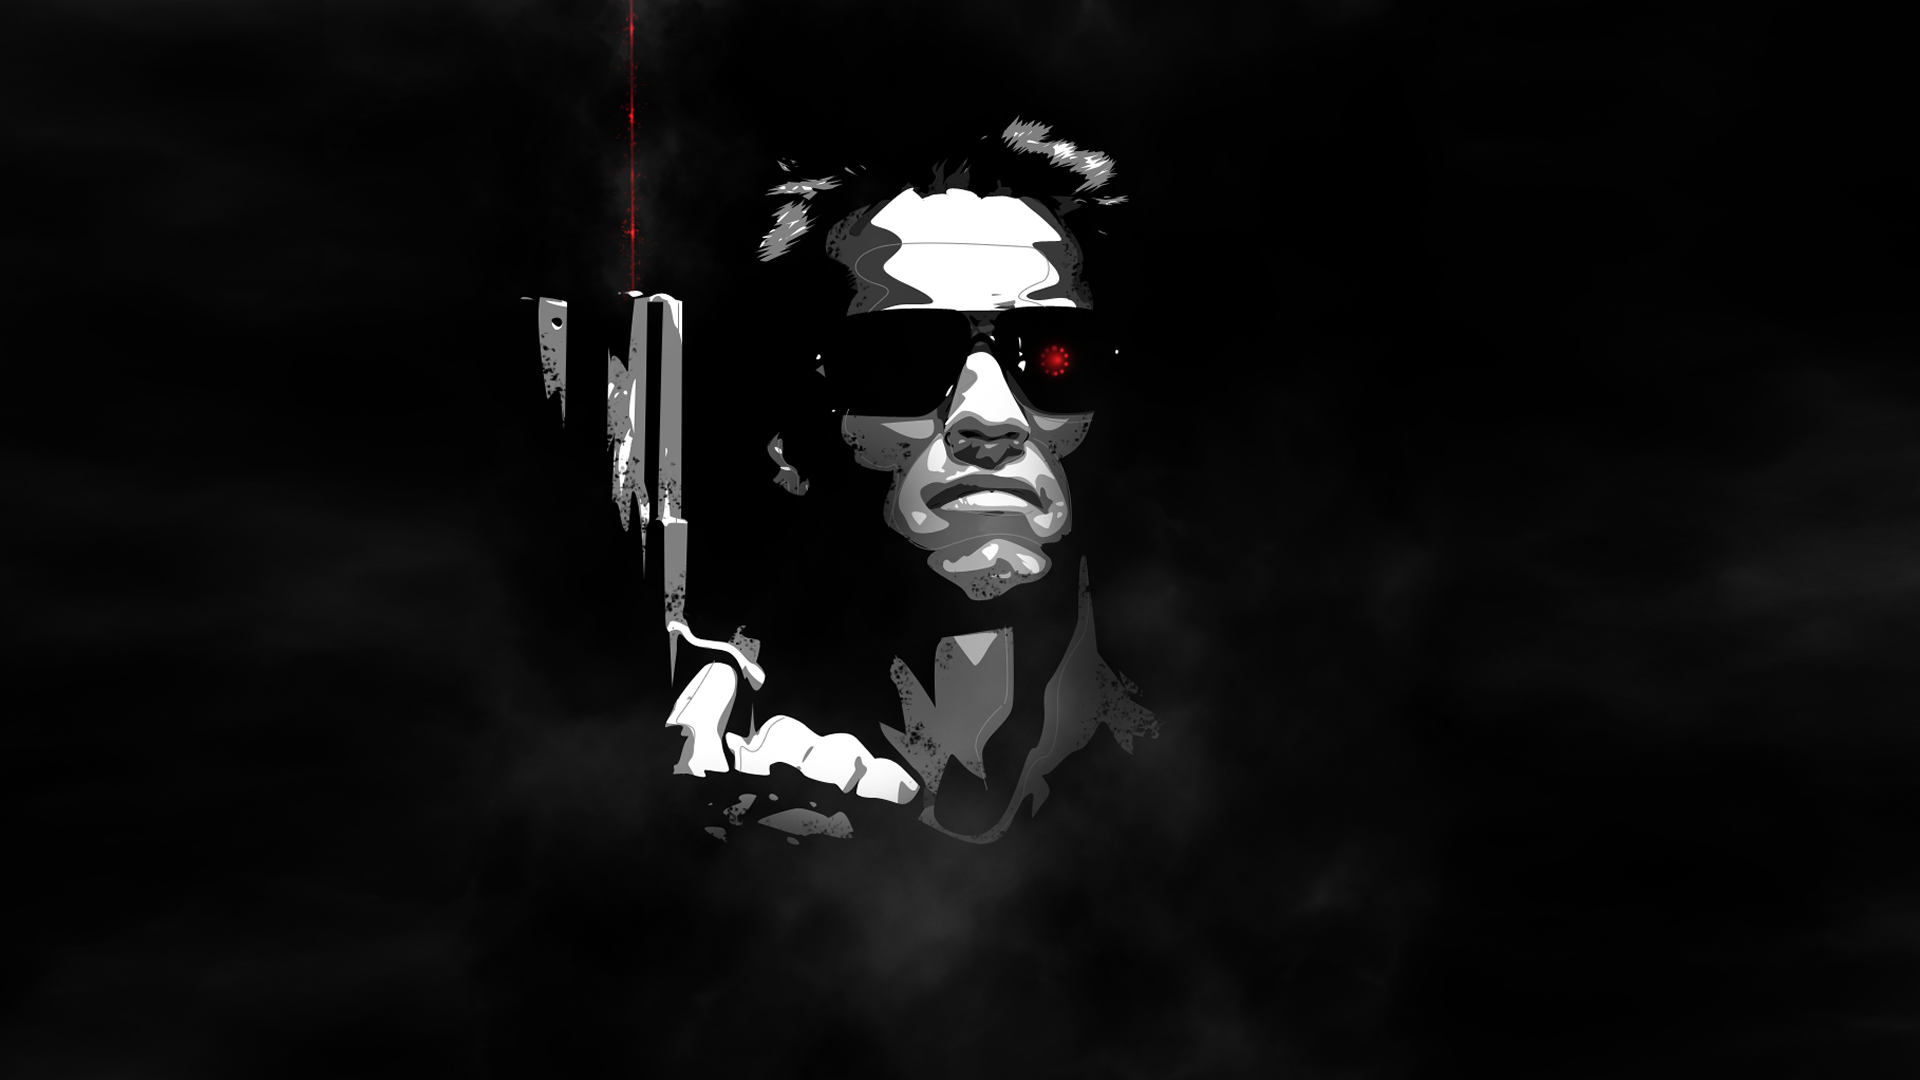 Terminator wallpaper